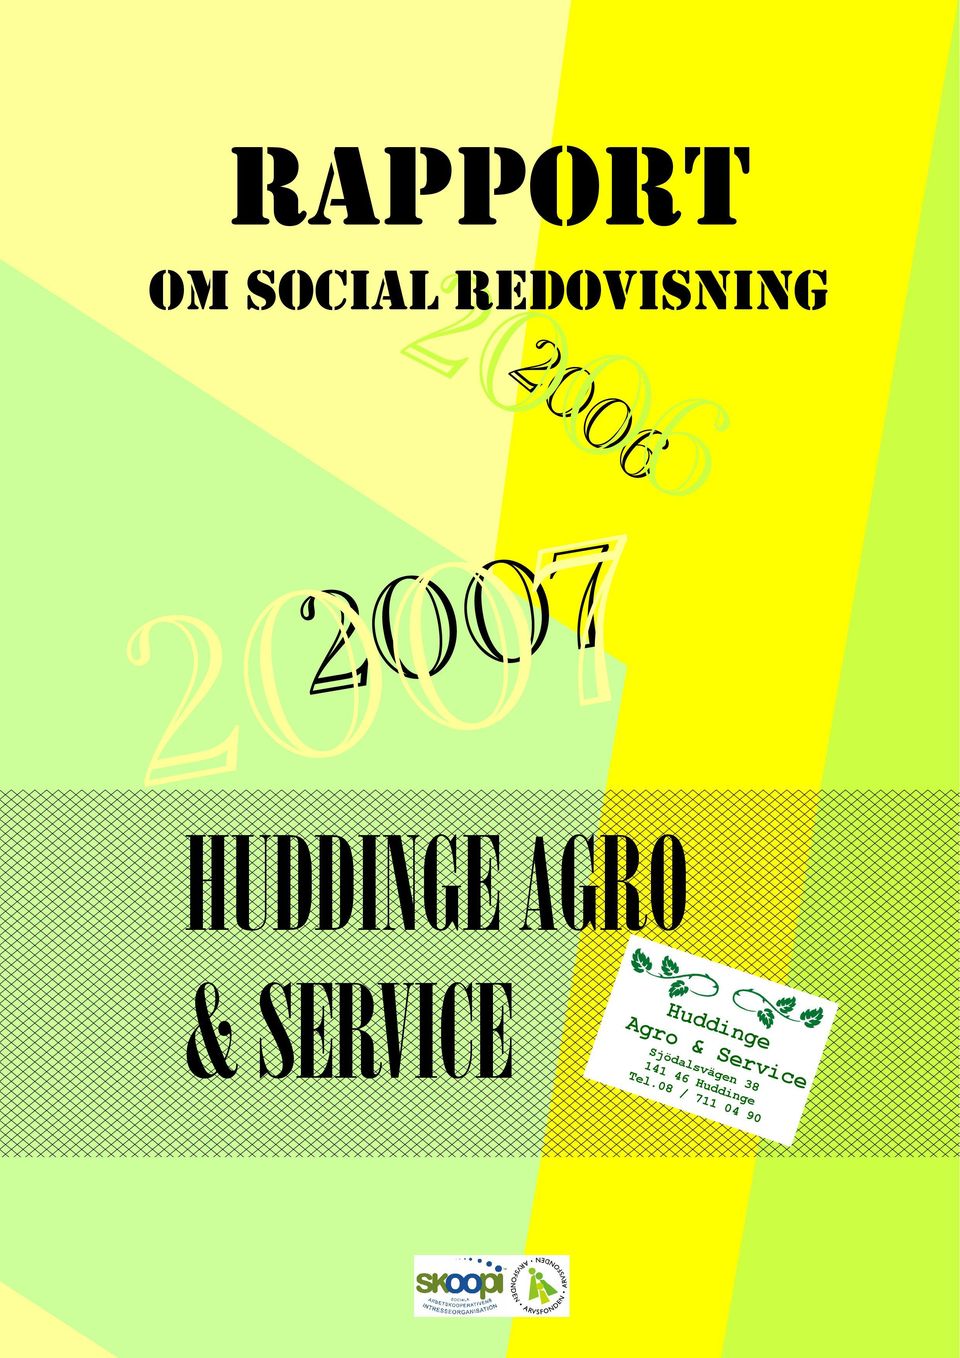 Huddinge Agro & Service